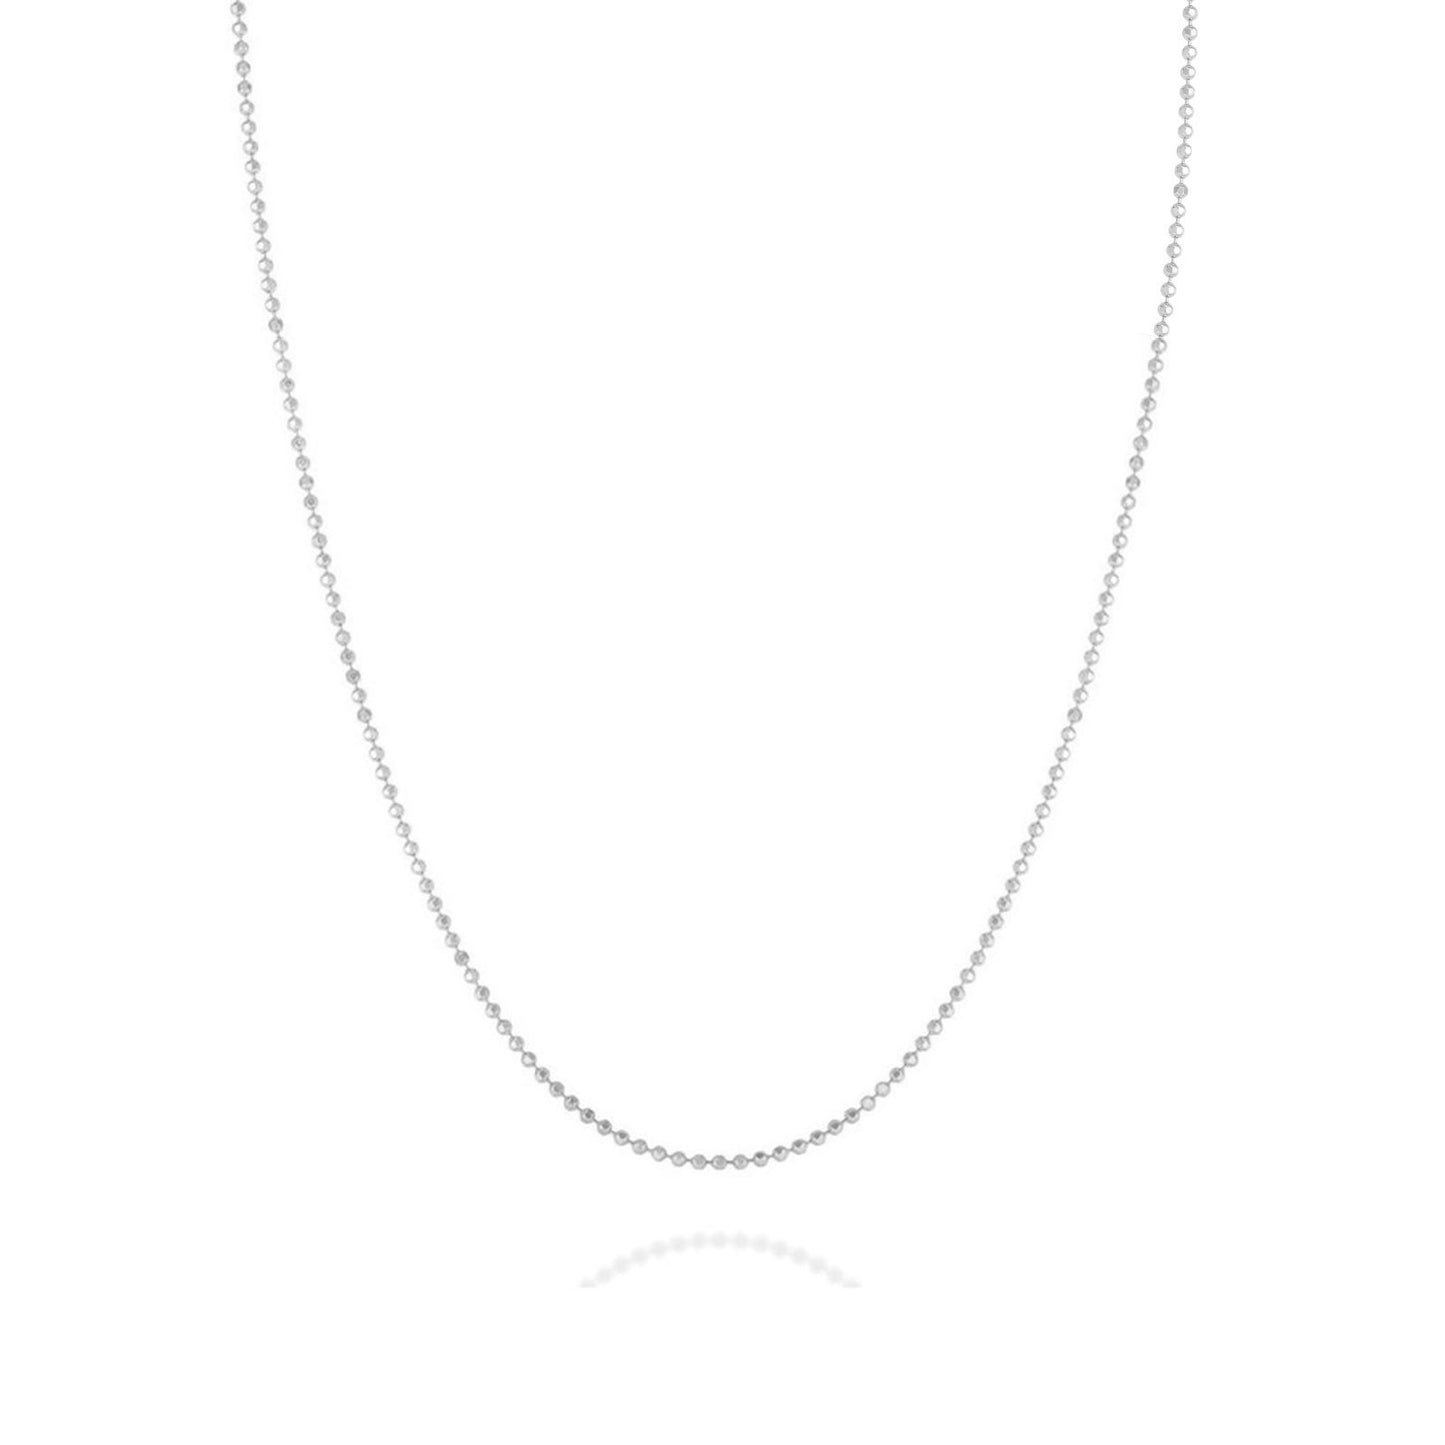 14k white gold Diamond Cut Bead Chain Necklace.